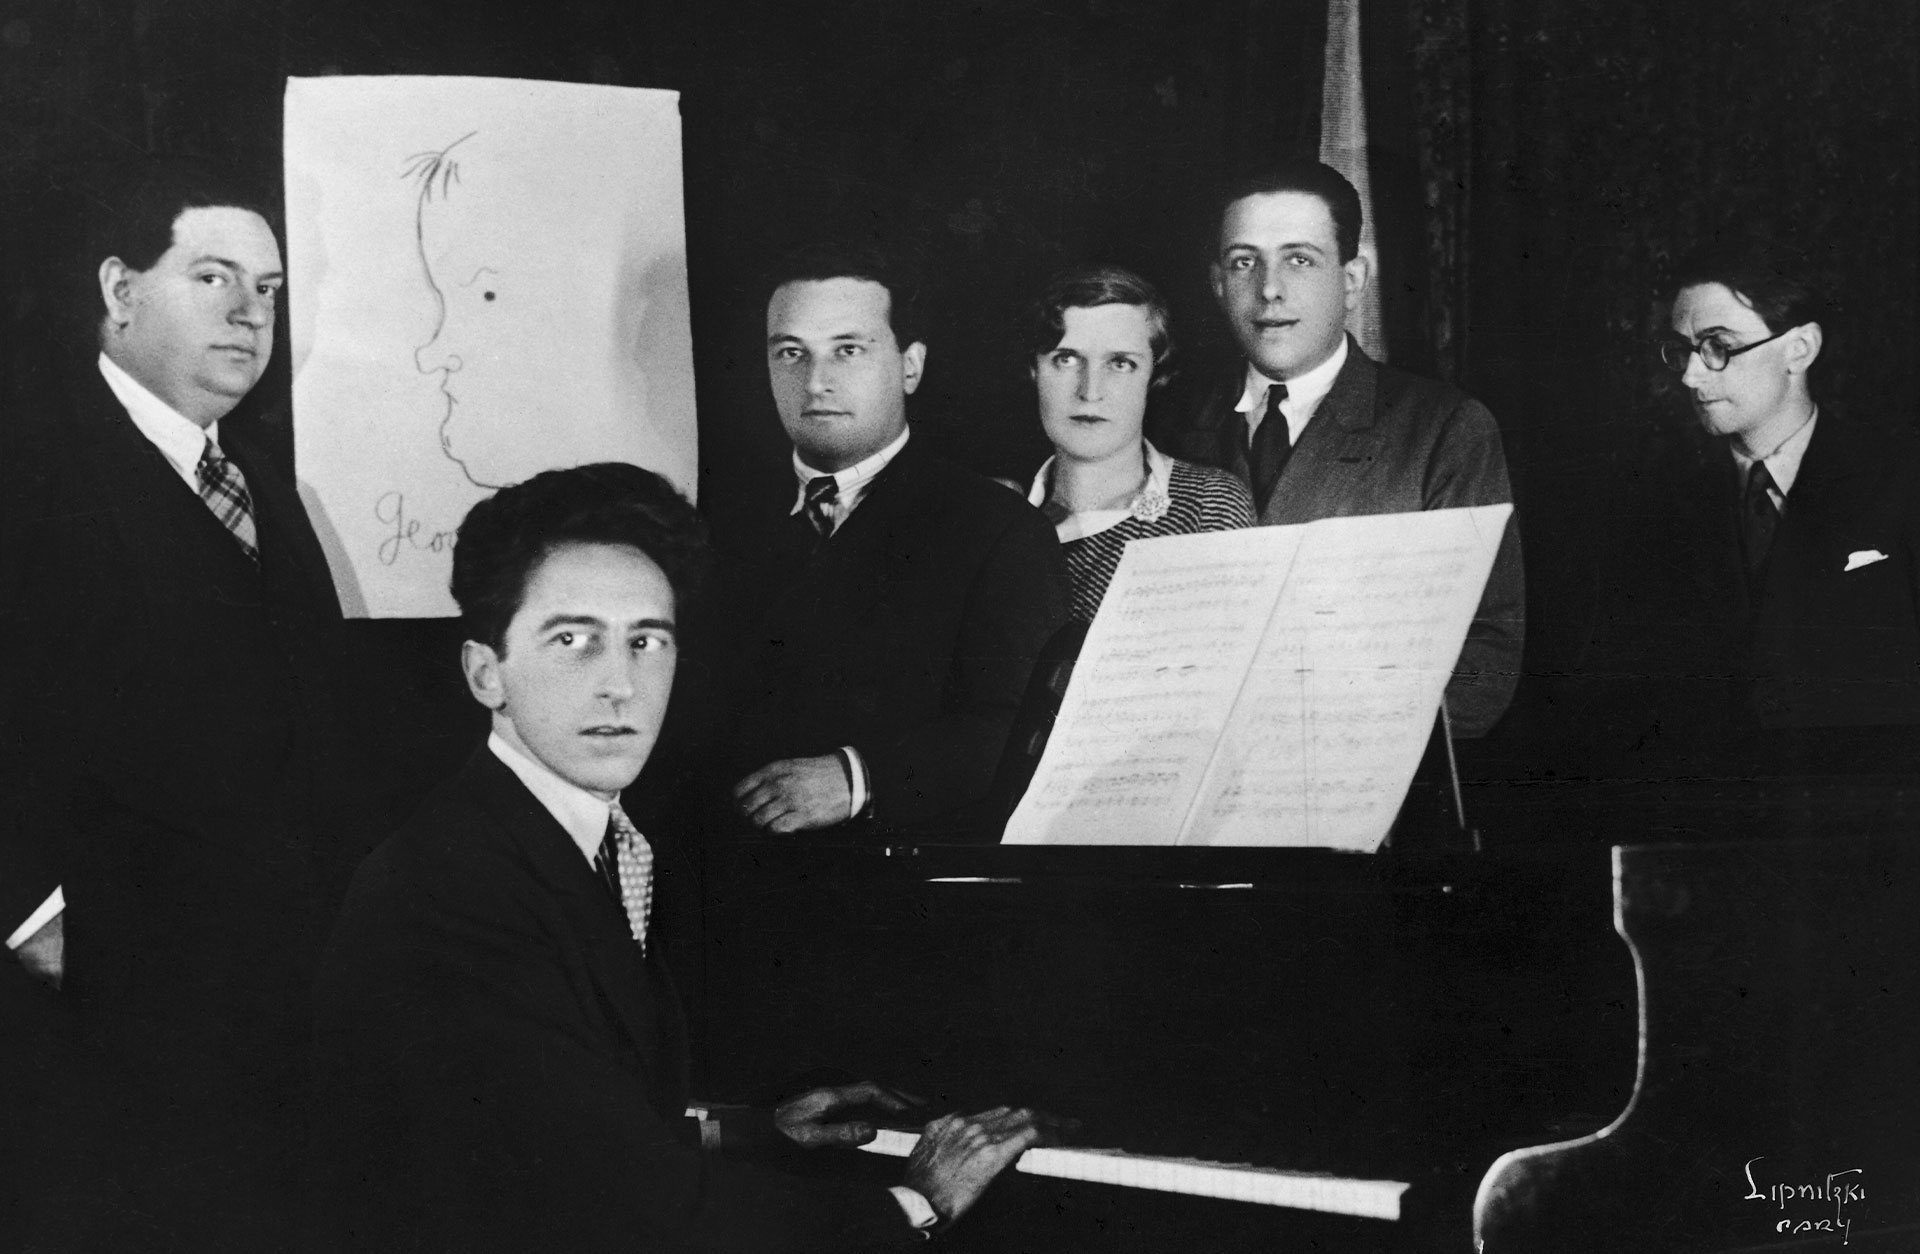 Kompositörsgruppen Les Six med sin talesperson Jean Cocteau vid pianot.